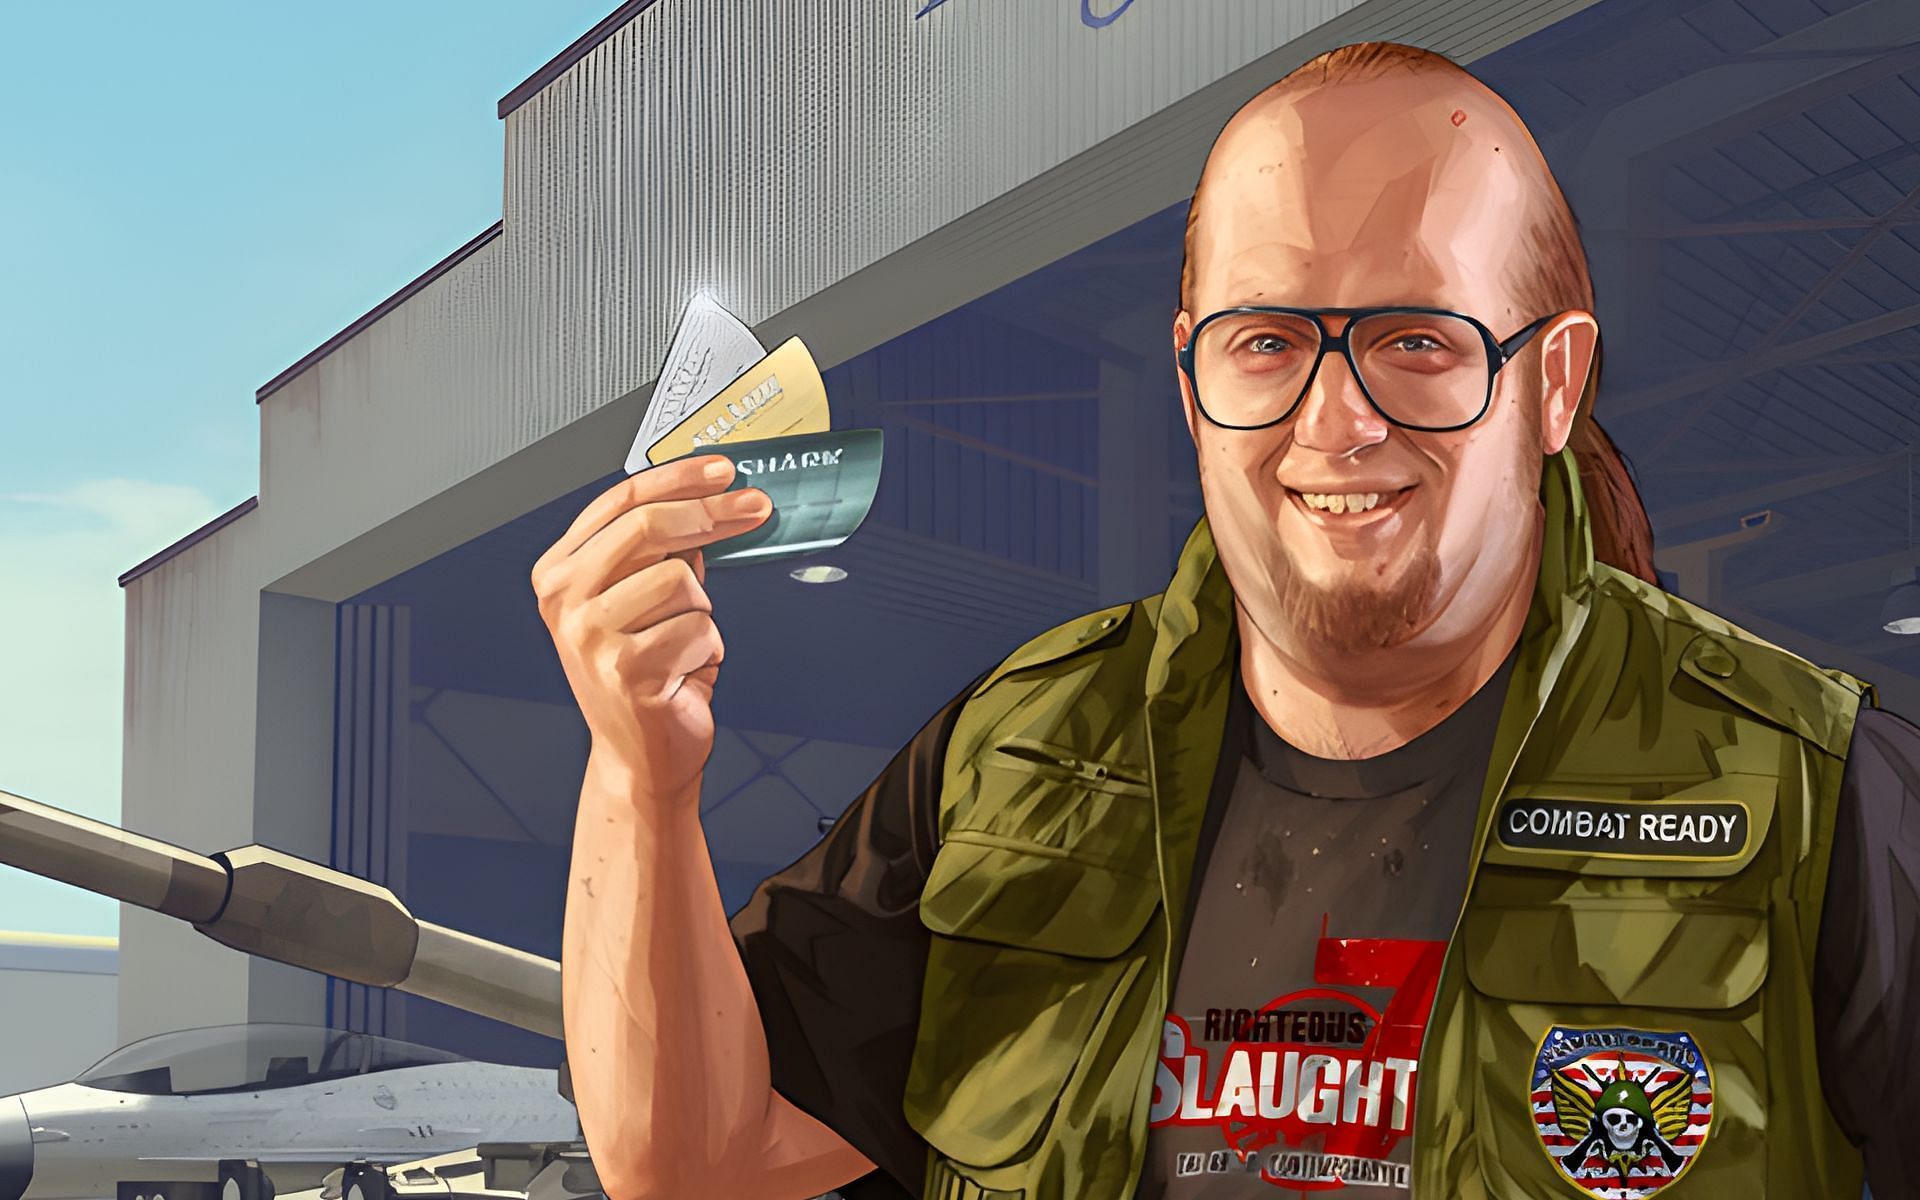 Spenders essentially get more money (Image via Rockstar Games)